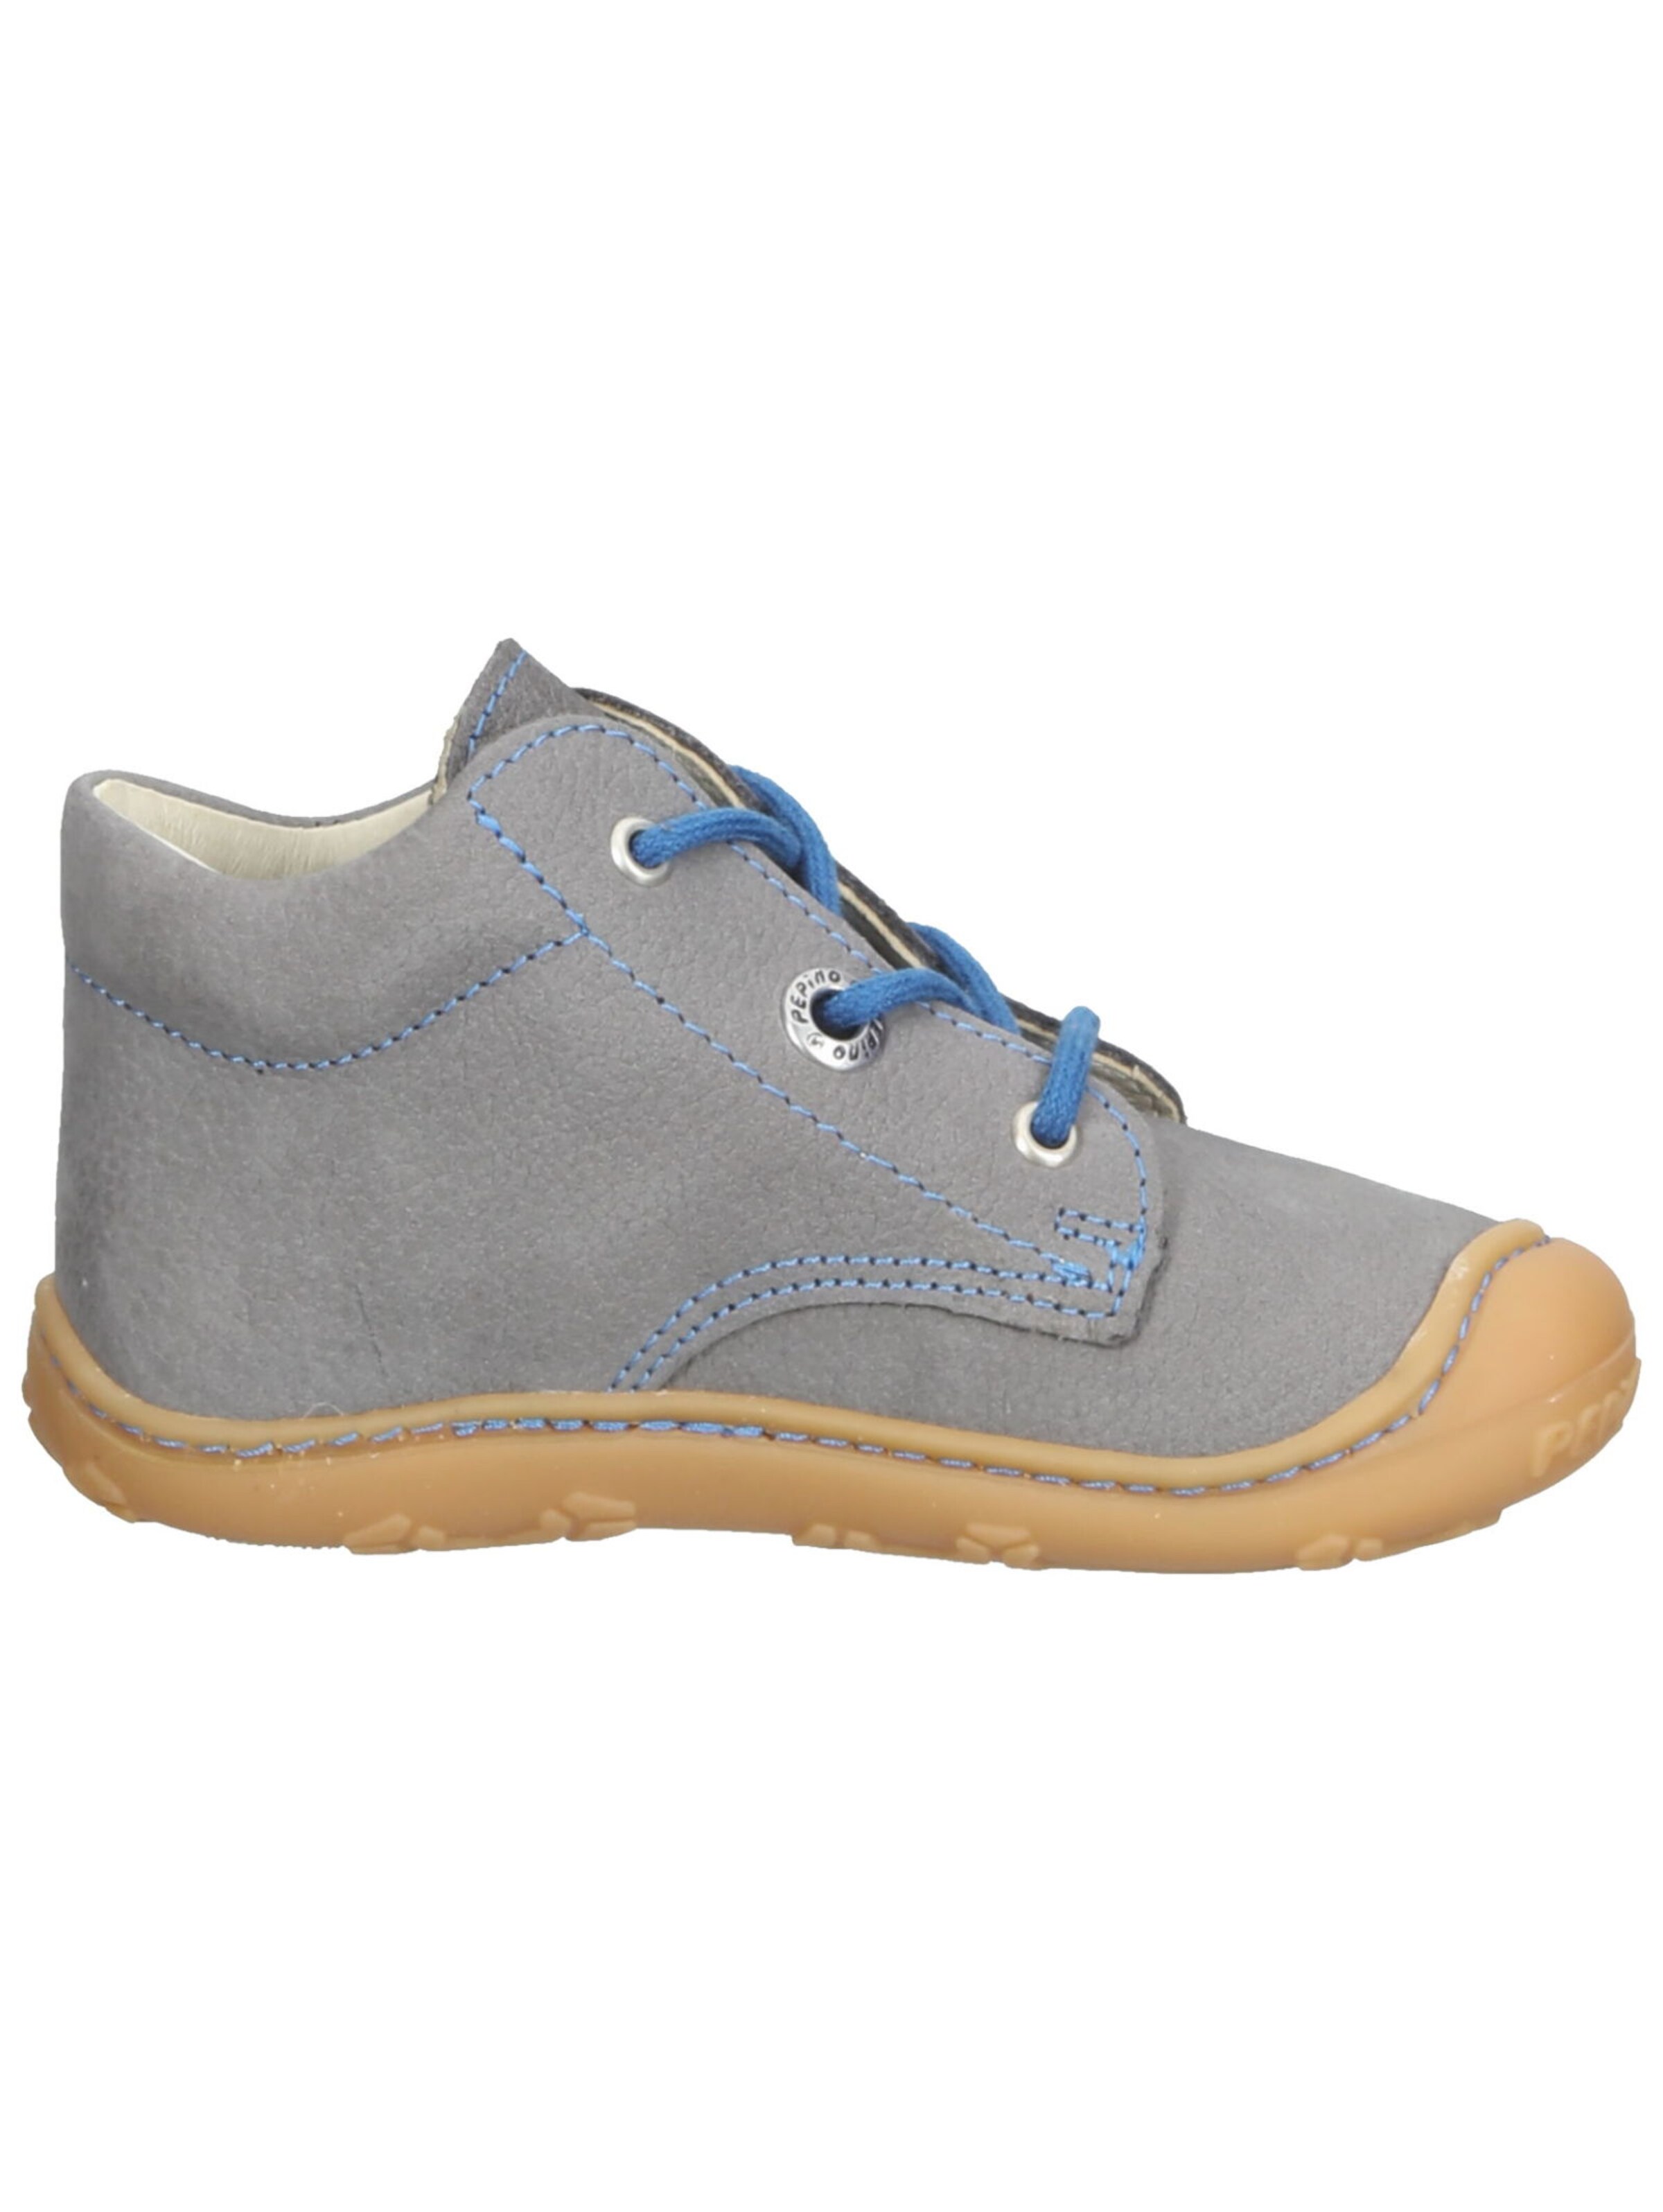 Kinder Schuhe Pepino Halbschuh in Grau - KL22431